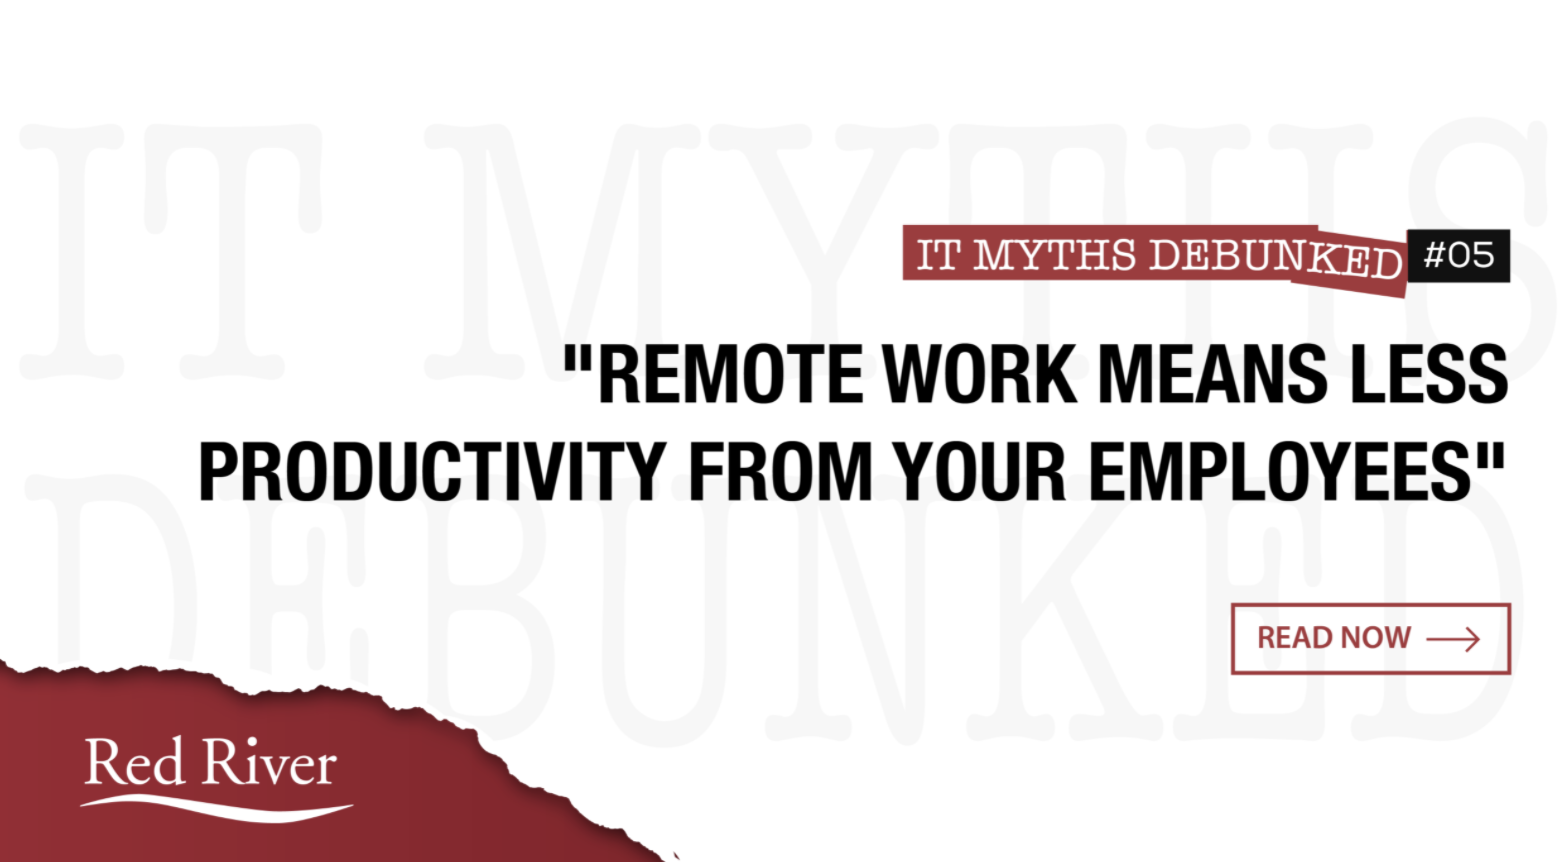 Remote Work Productivity